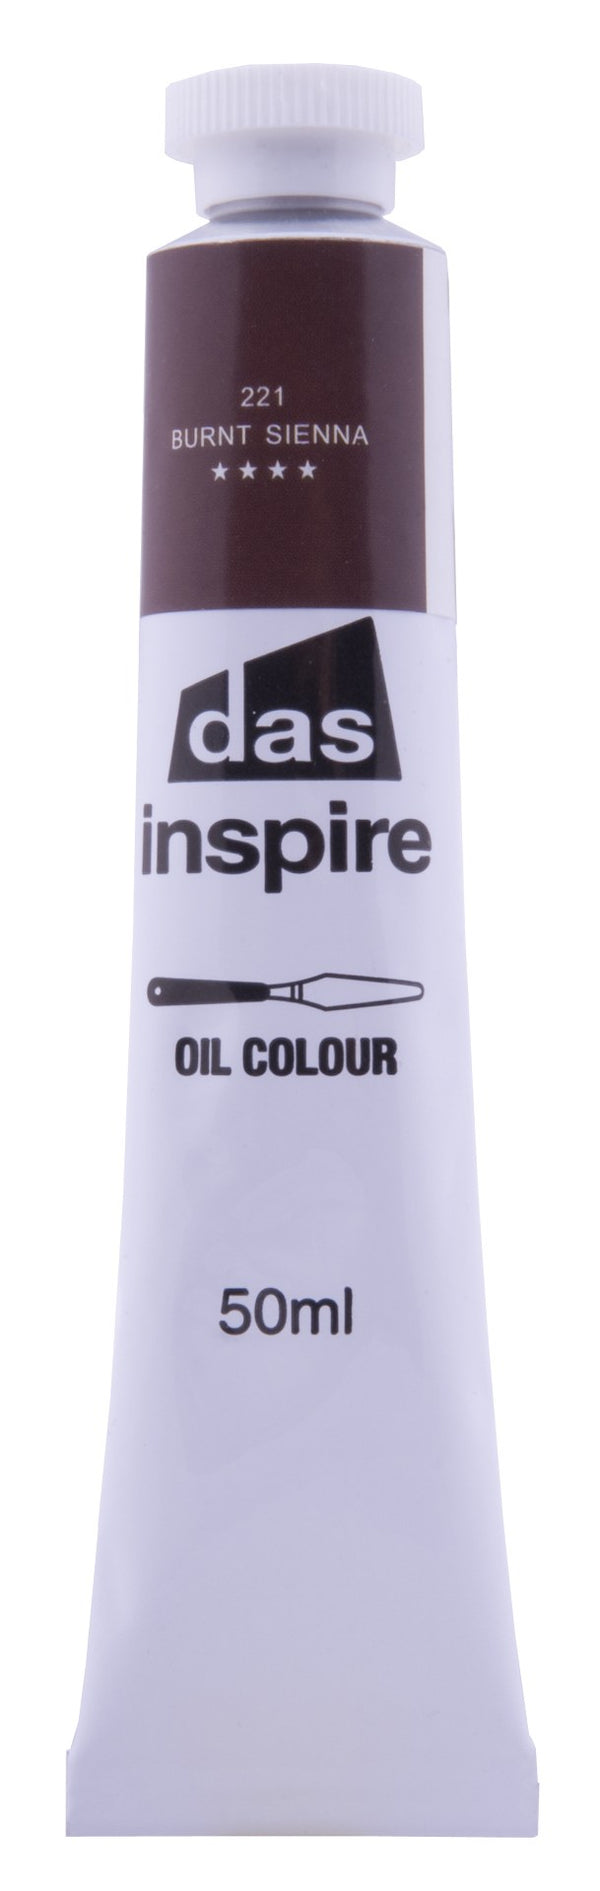 Das Inspire Oil Paint 50ml#colour_BURNT SIENNA